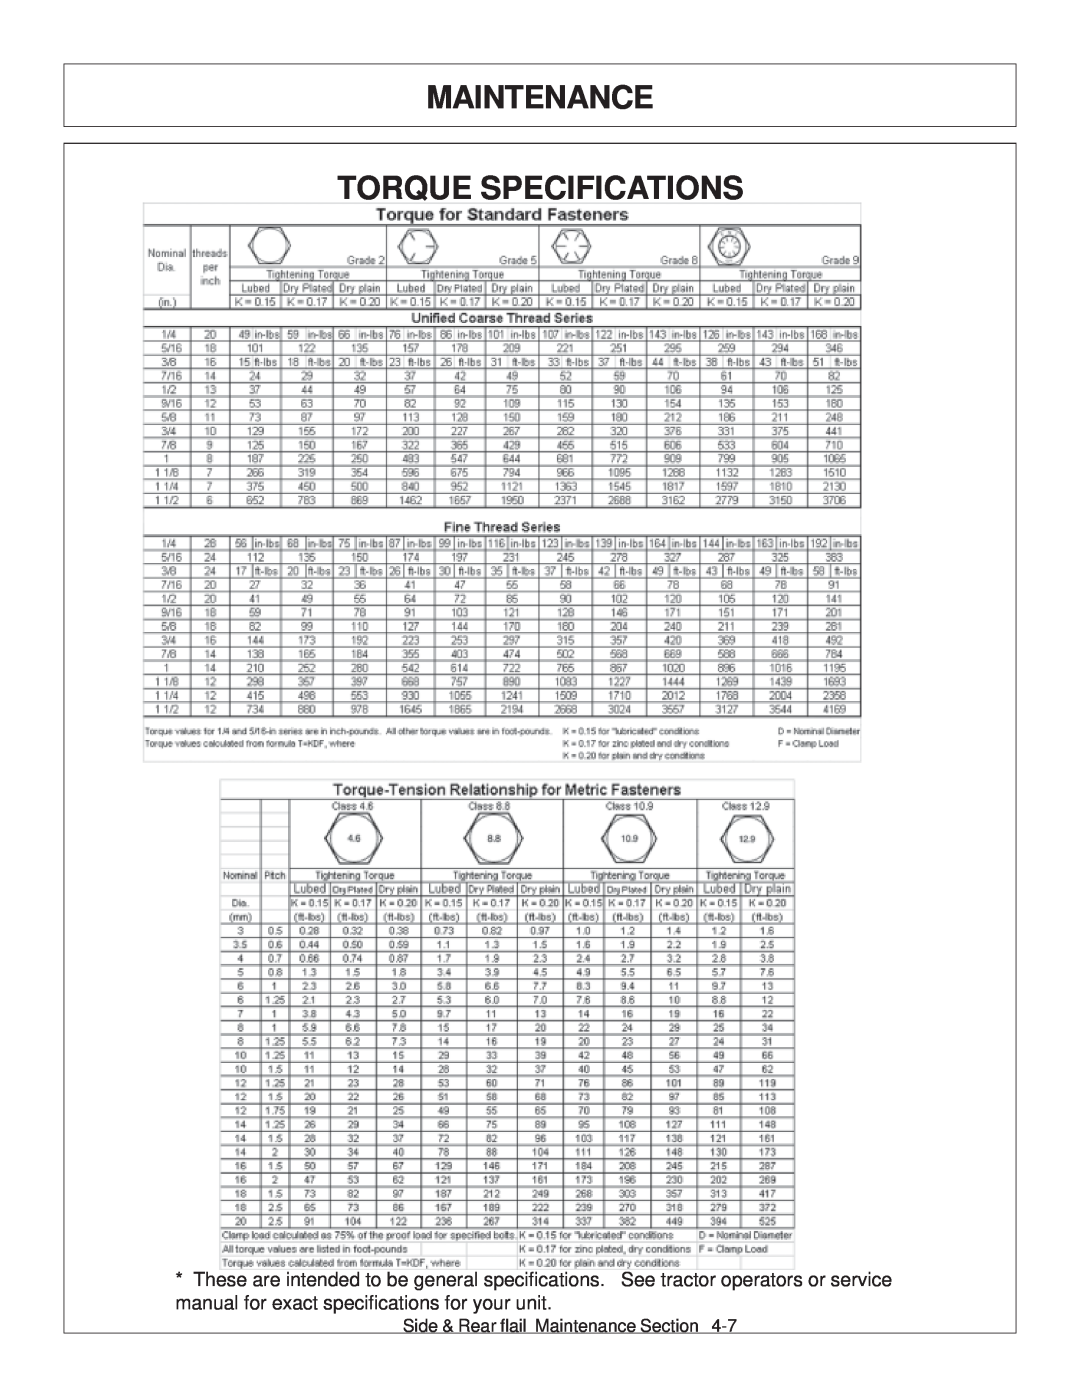 Tiger JD 5093E, JD 5083E, JD 5101E manual Maintenance Torque Specifications 